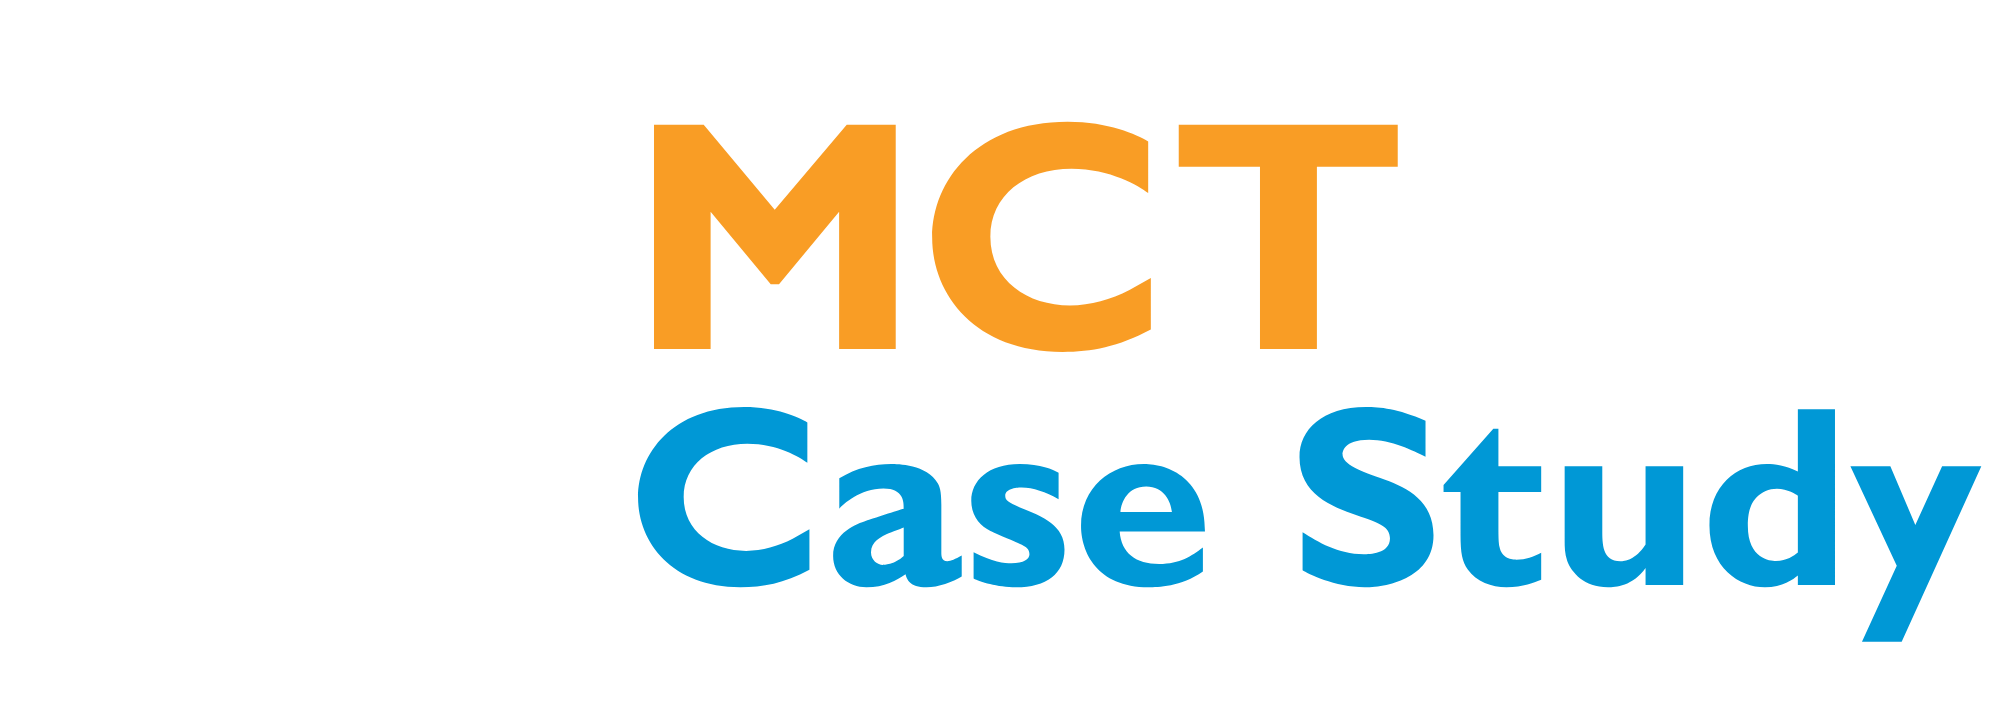 MCT Case Study Logo